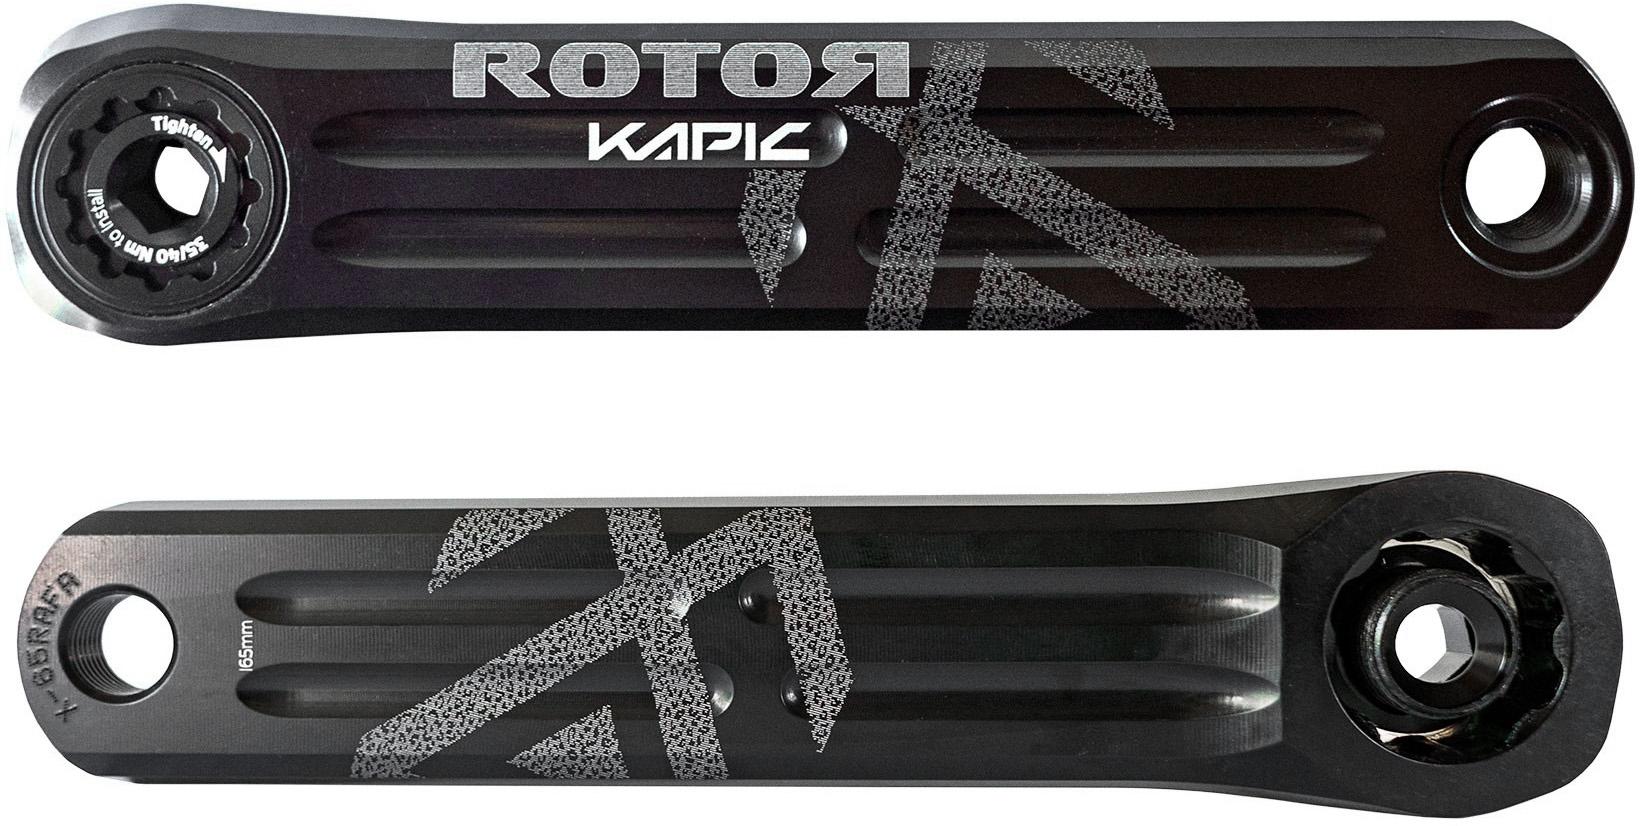 Rotor Kapic Crank Arms - Black